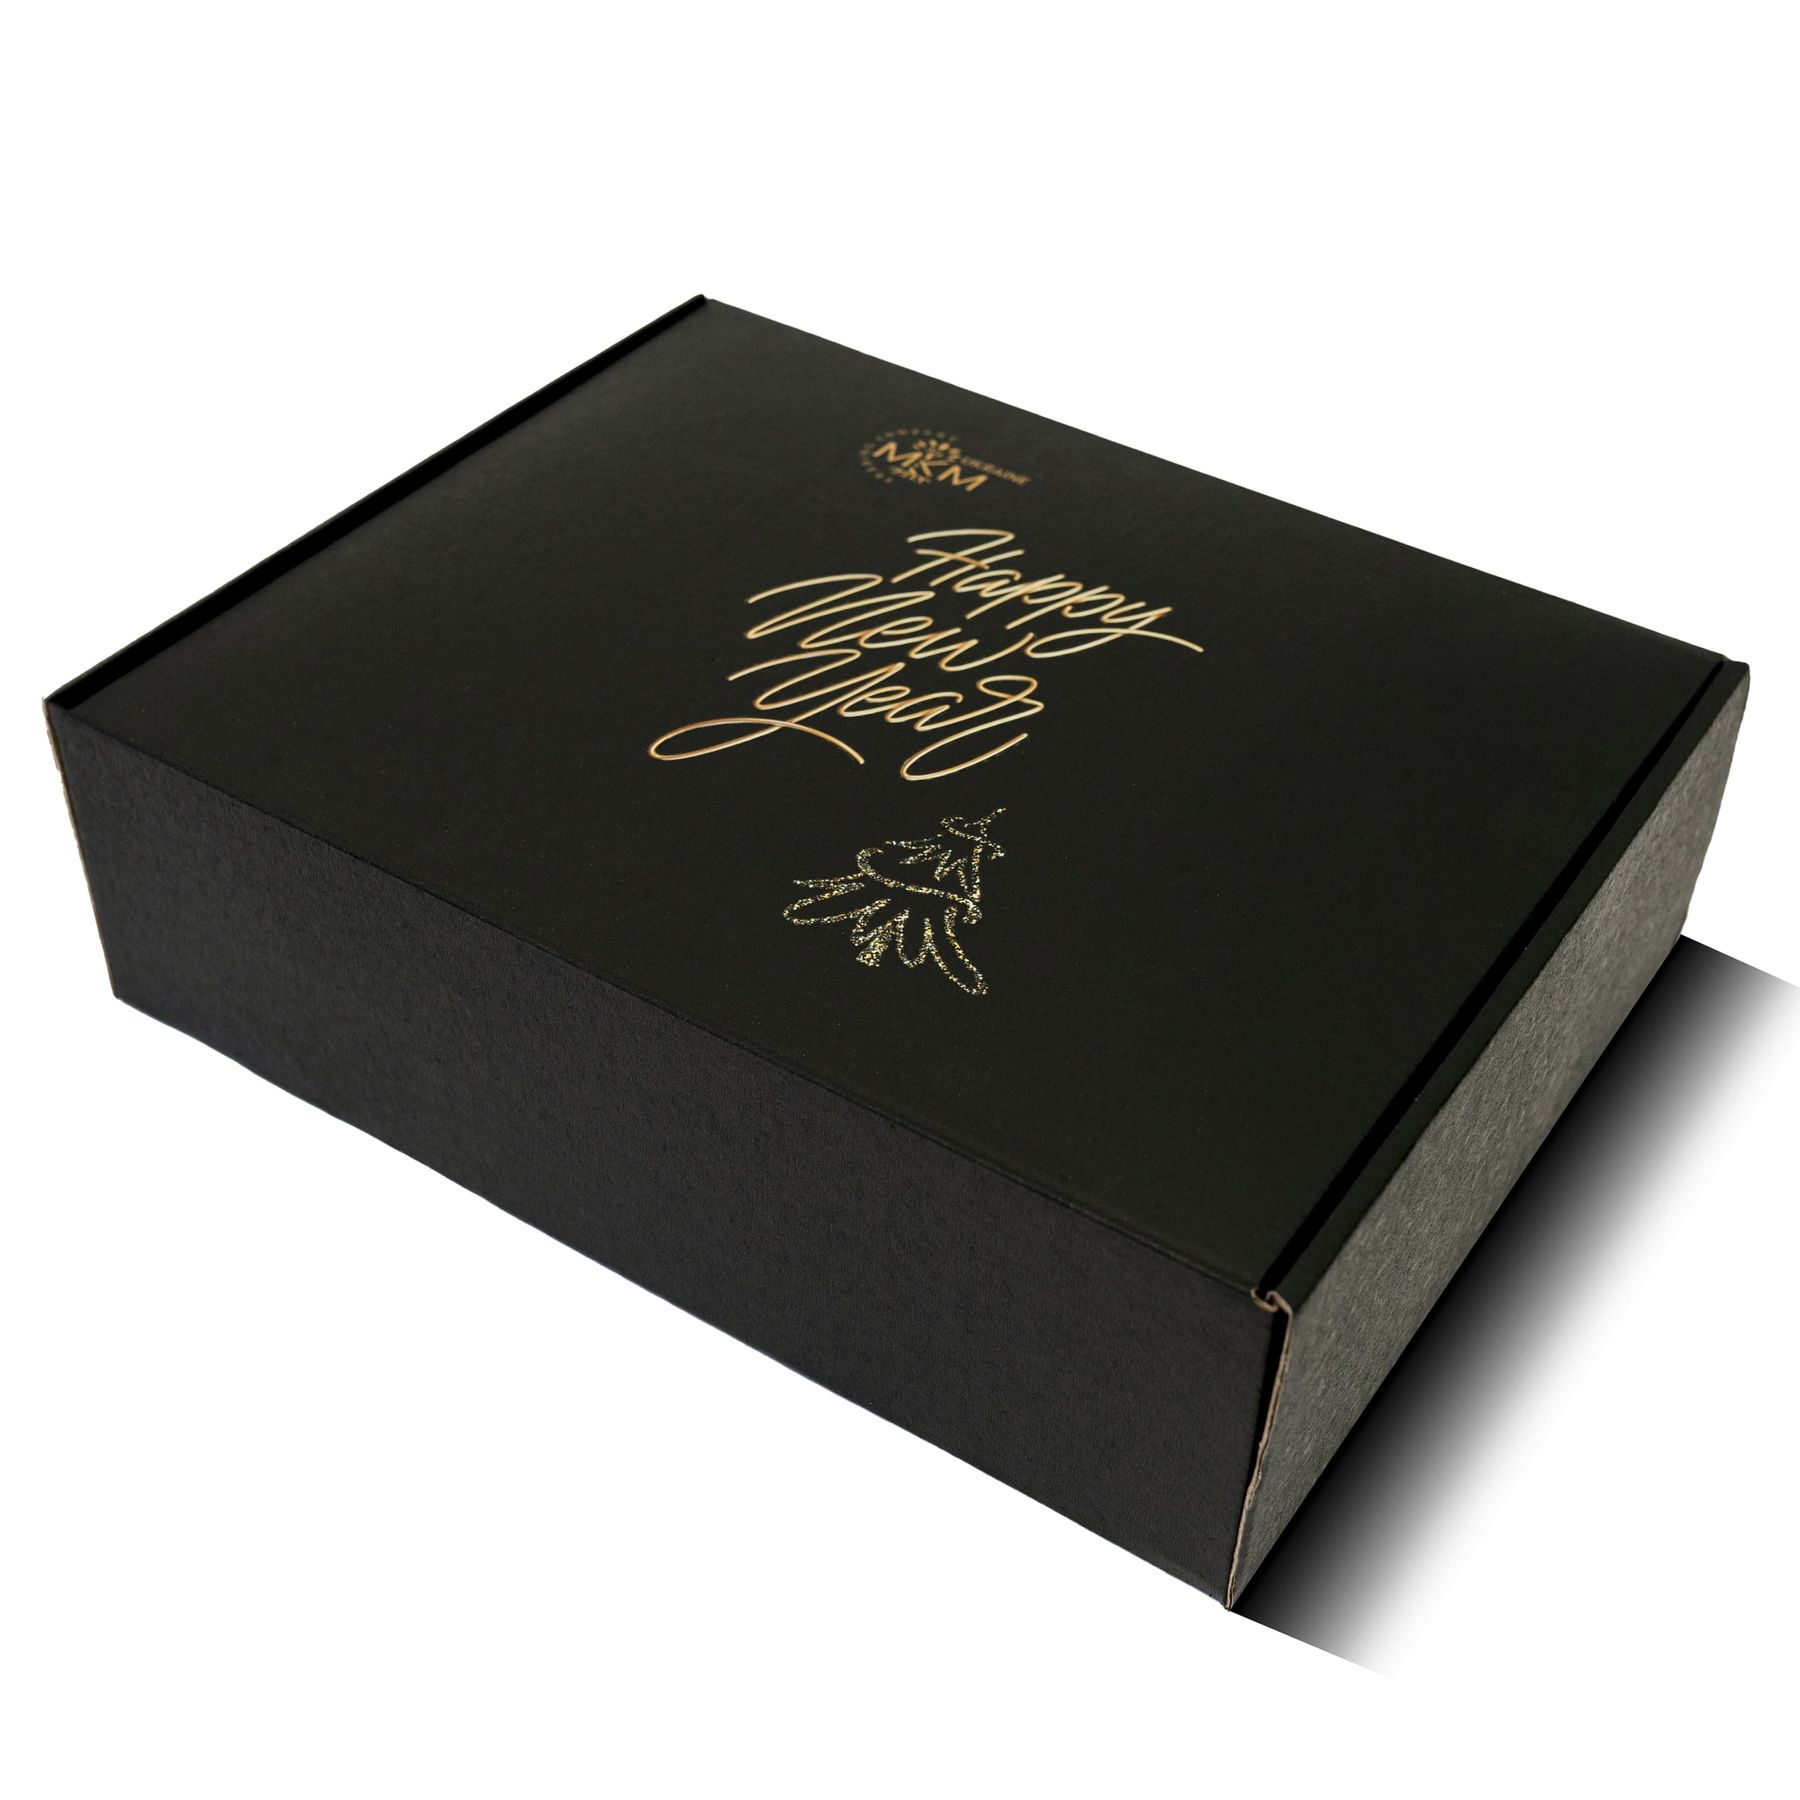 Black cardboard gift box with logo - 30-24-9